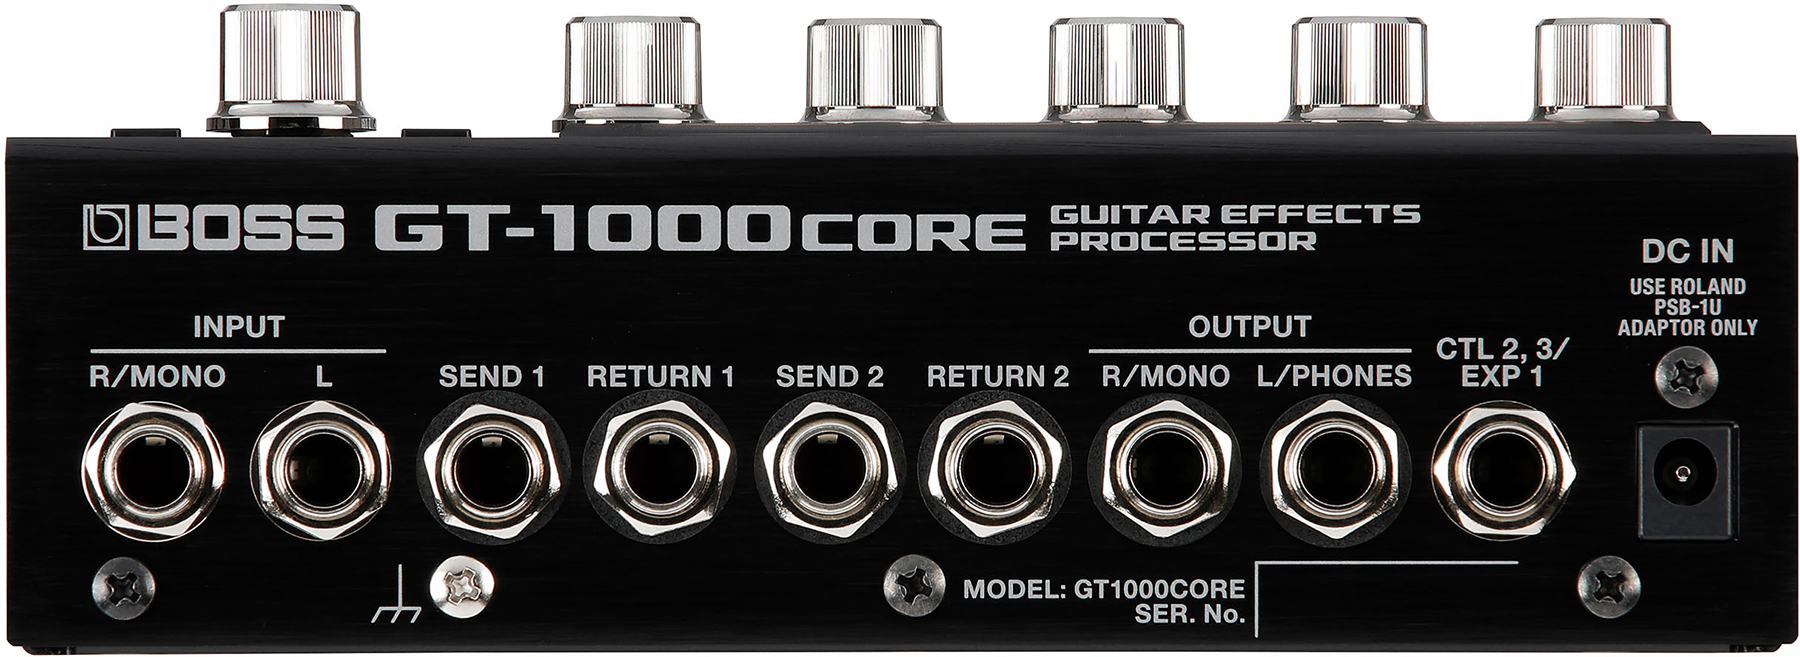 Boss Gt1000core Guitar Effects Processor - Simulation ModÉlisation Ampli Guitare - Variation 1